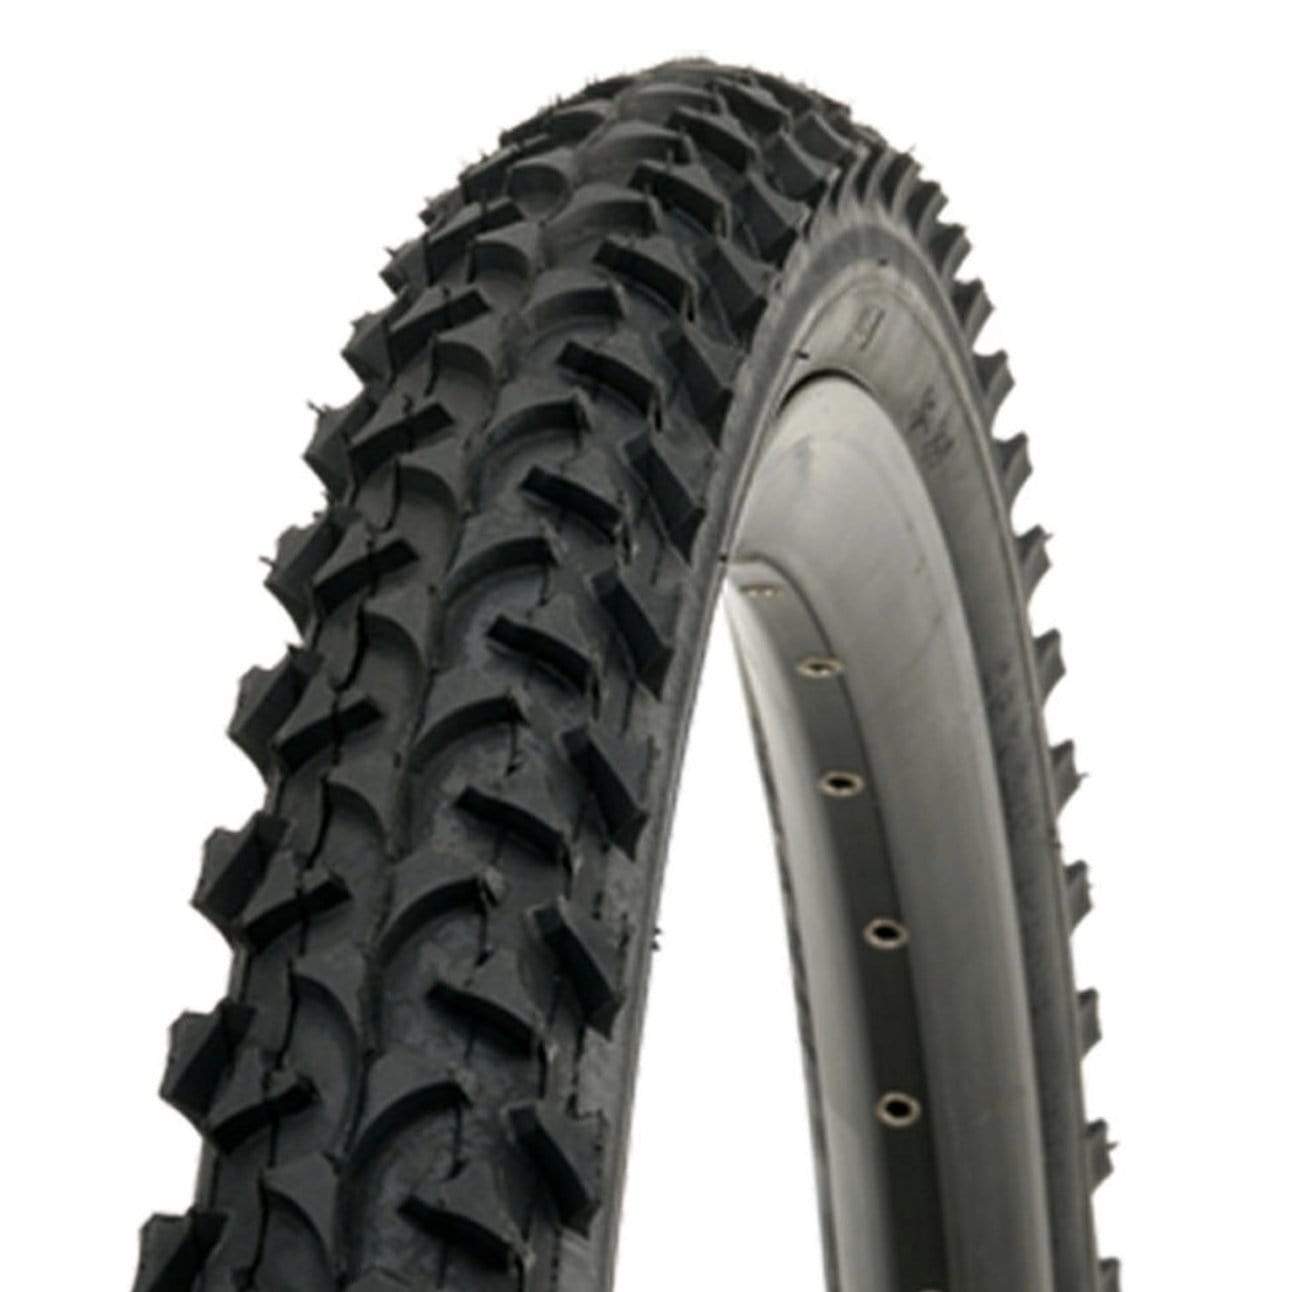 Giant Z-Max Style 26" Mountain Bike Tire - 26 x 2.0